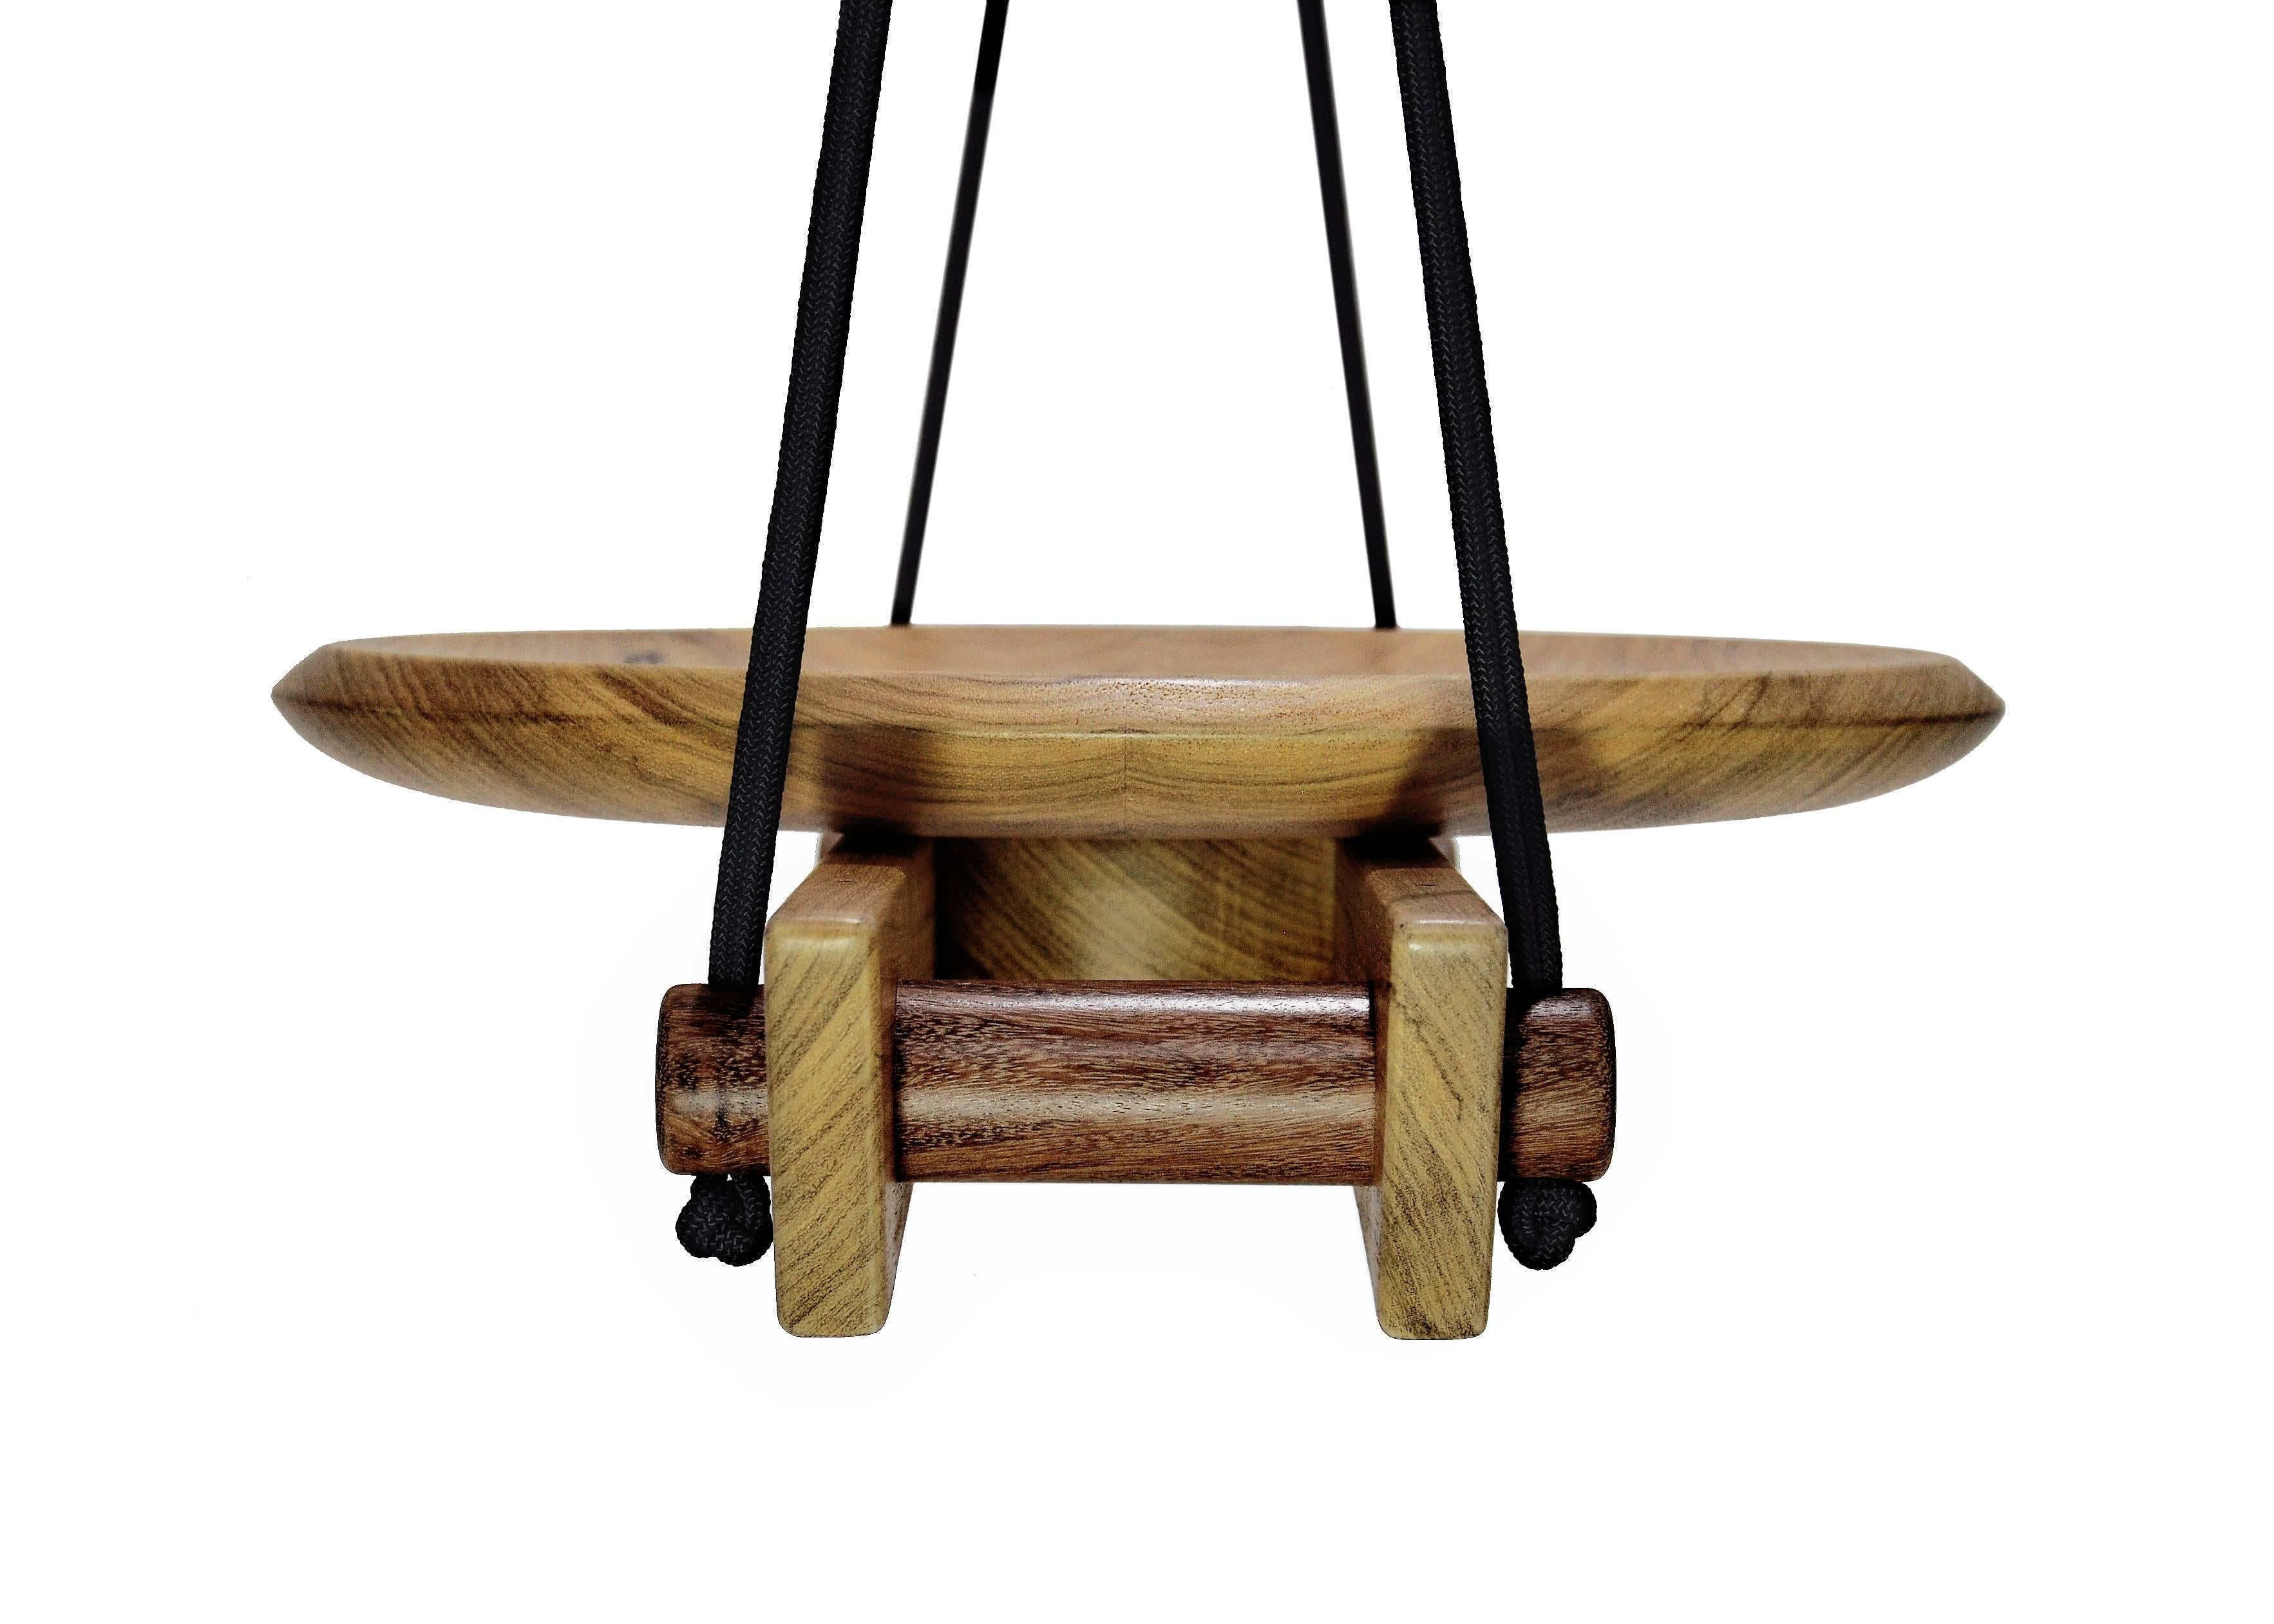 Other Swing 'Viga' in Tropical Brazilian Hardwood, Contemporary Brazilian Design For Sale